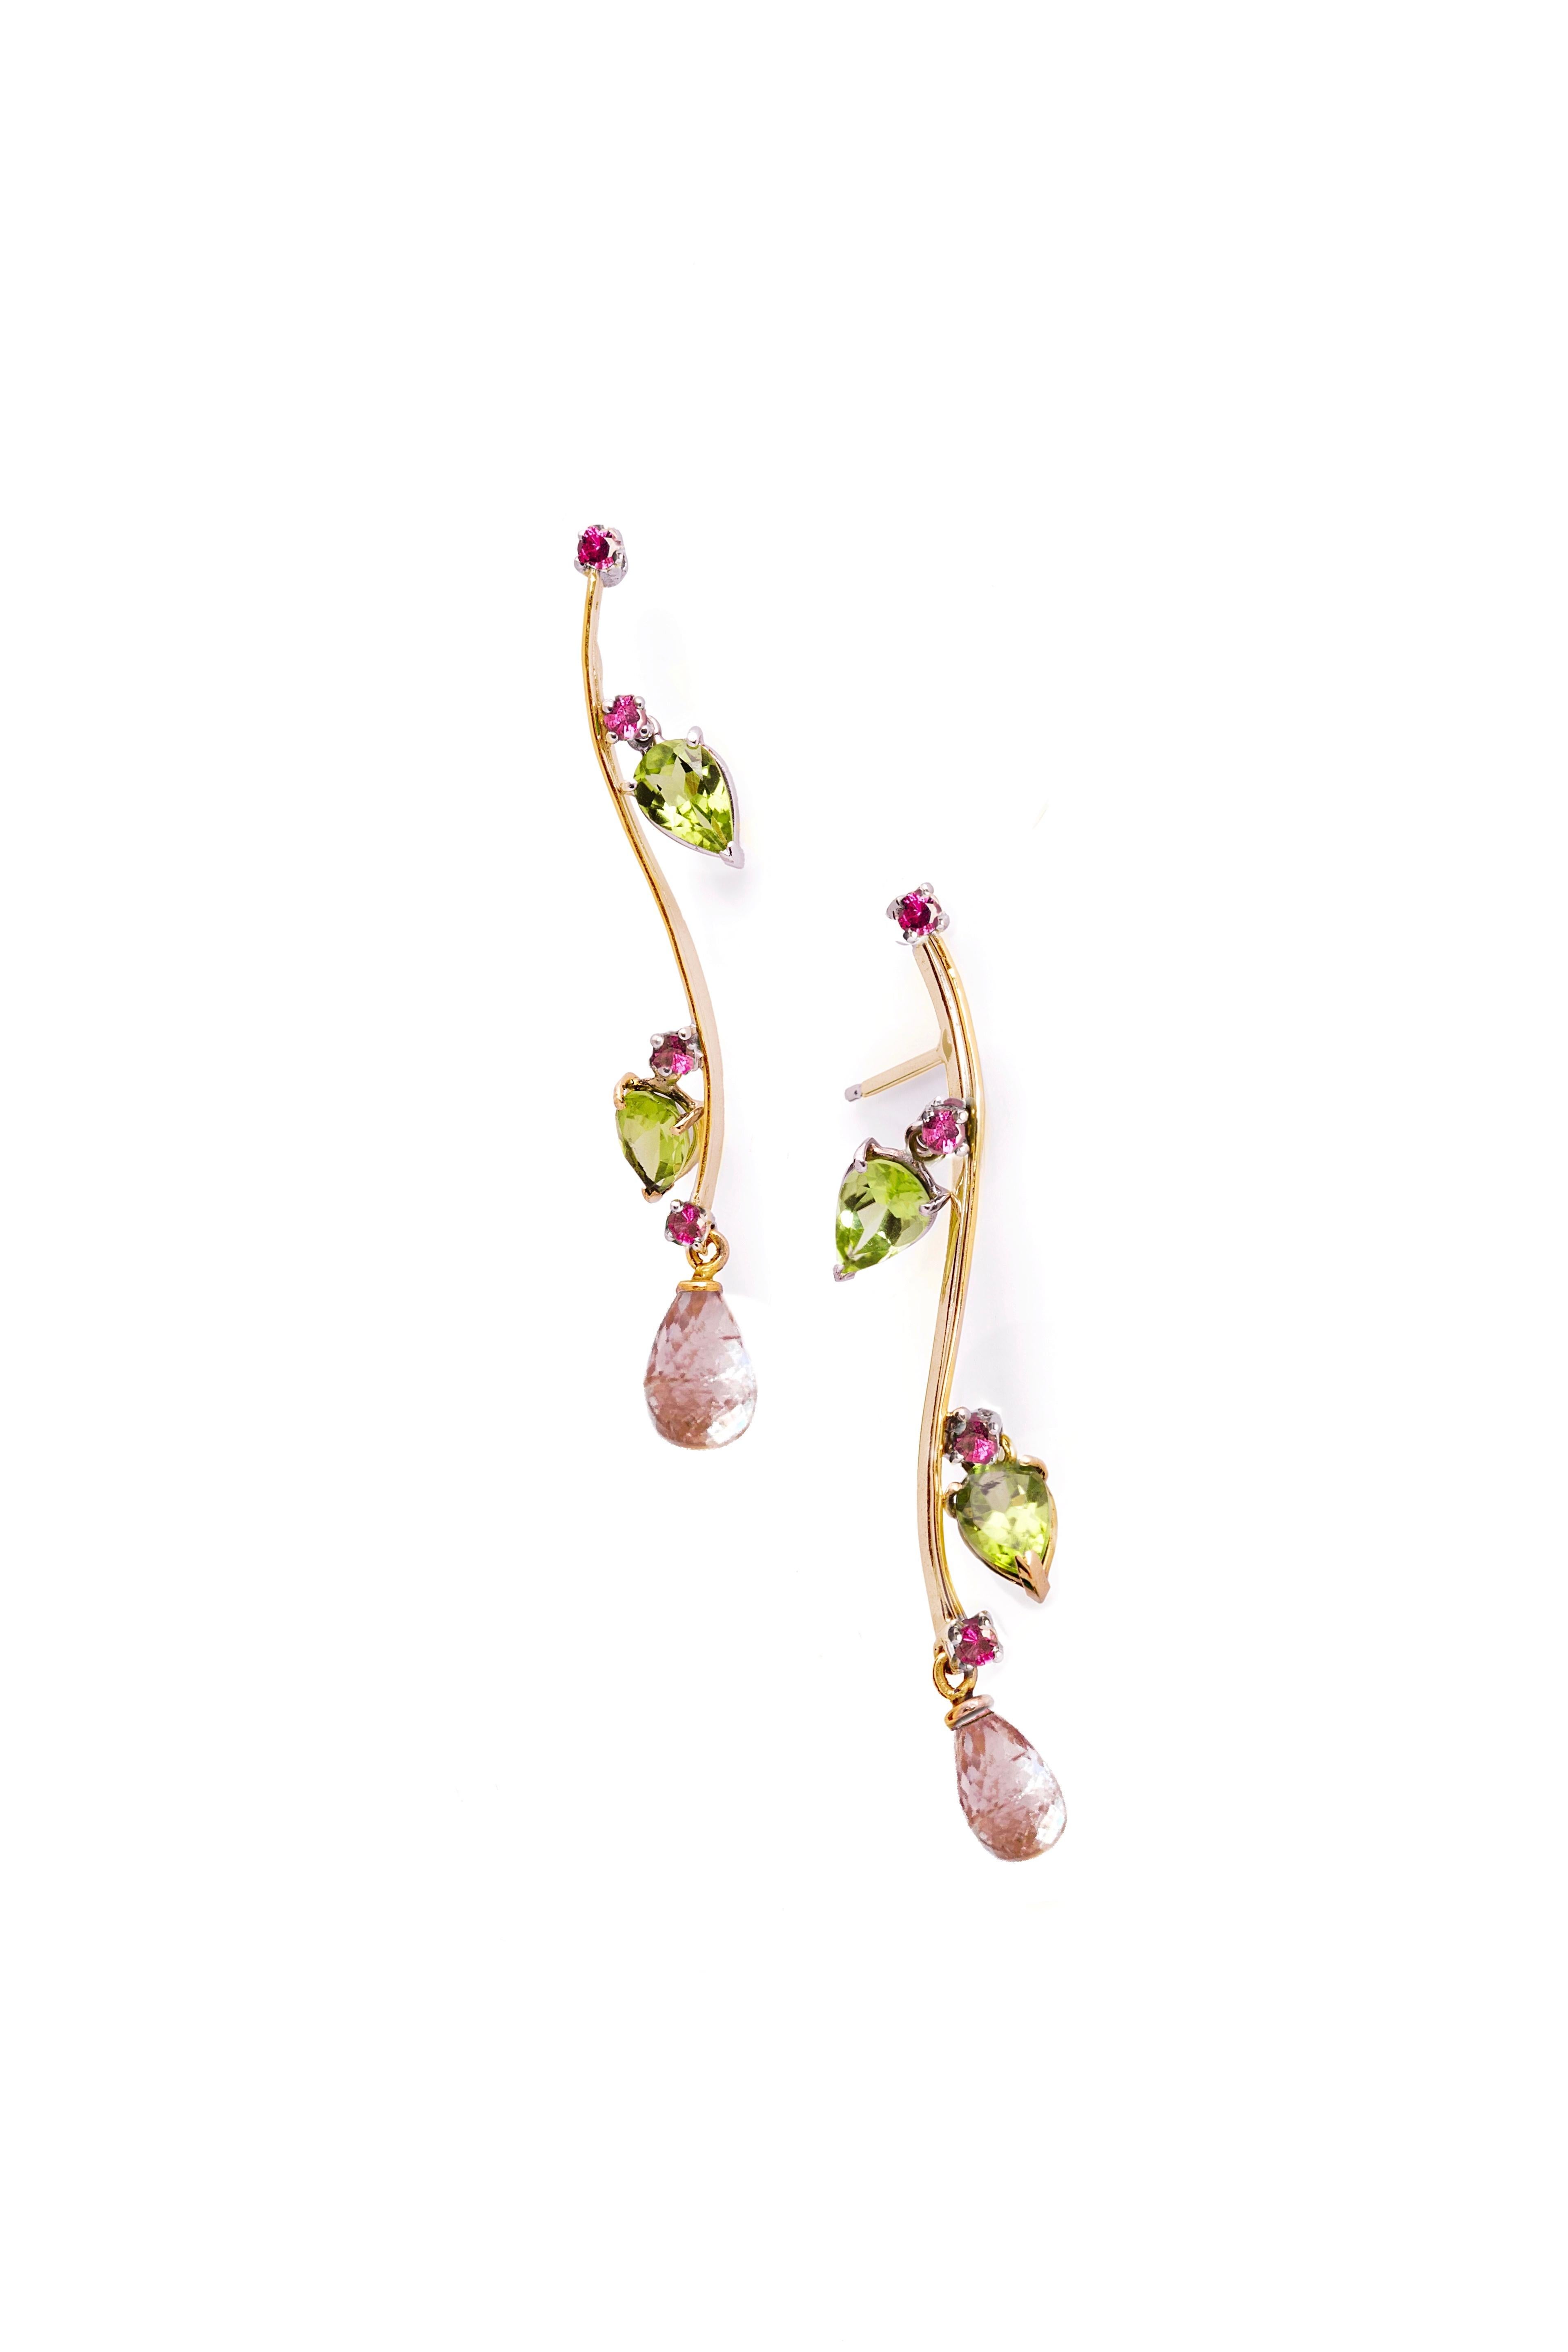 Romantic Rossella Ugolini 18K Yellow Gold Earrings Tourmaline Peridot Dangle Earrings  For Sale